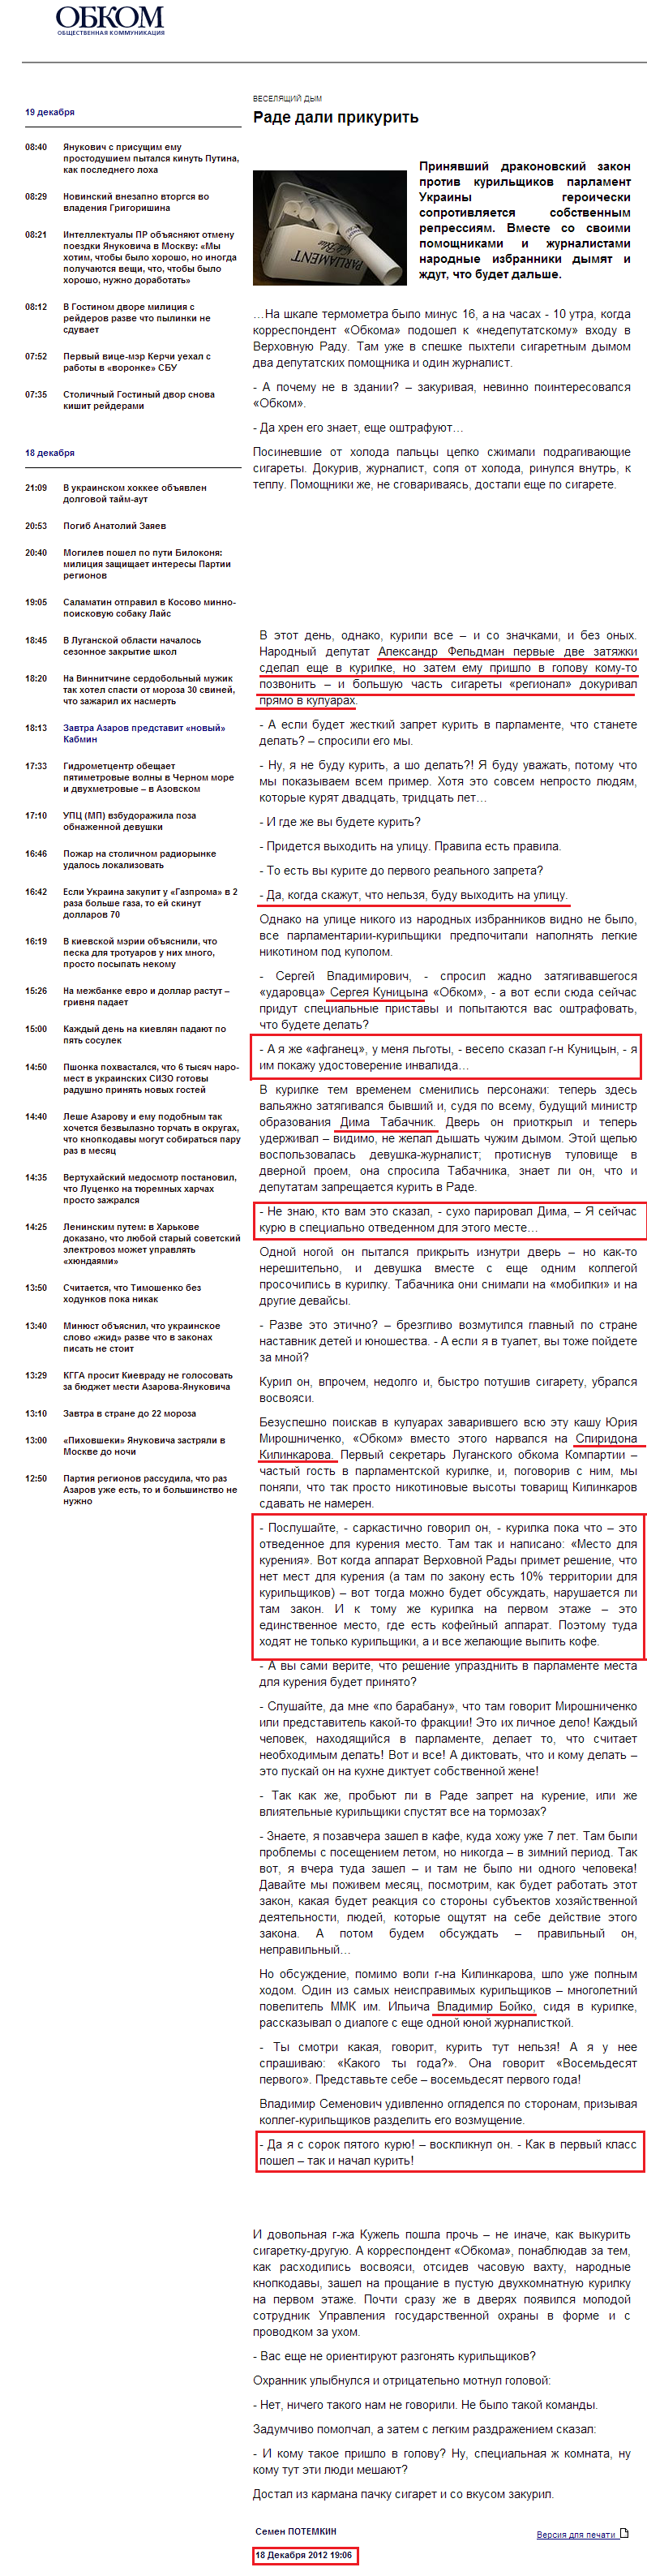 http://obkom.net.ua/articles/2012-12/18.1906.shtml